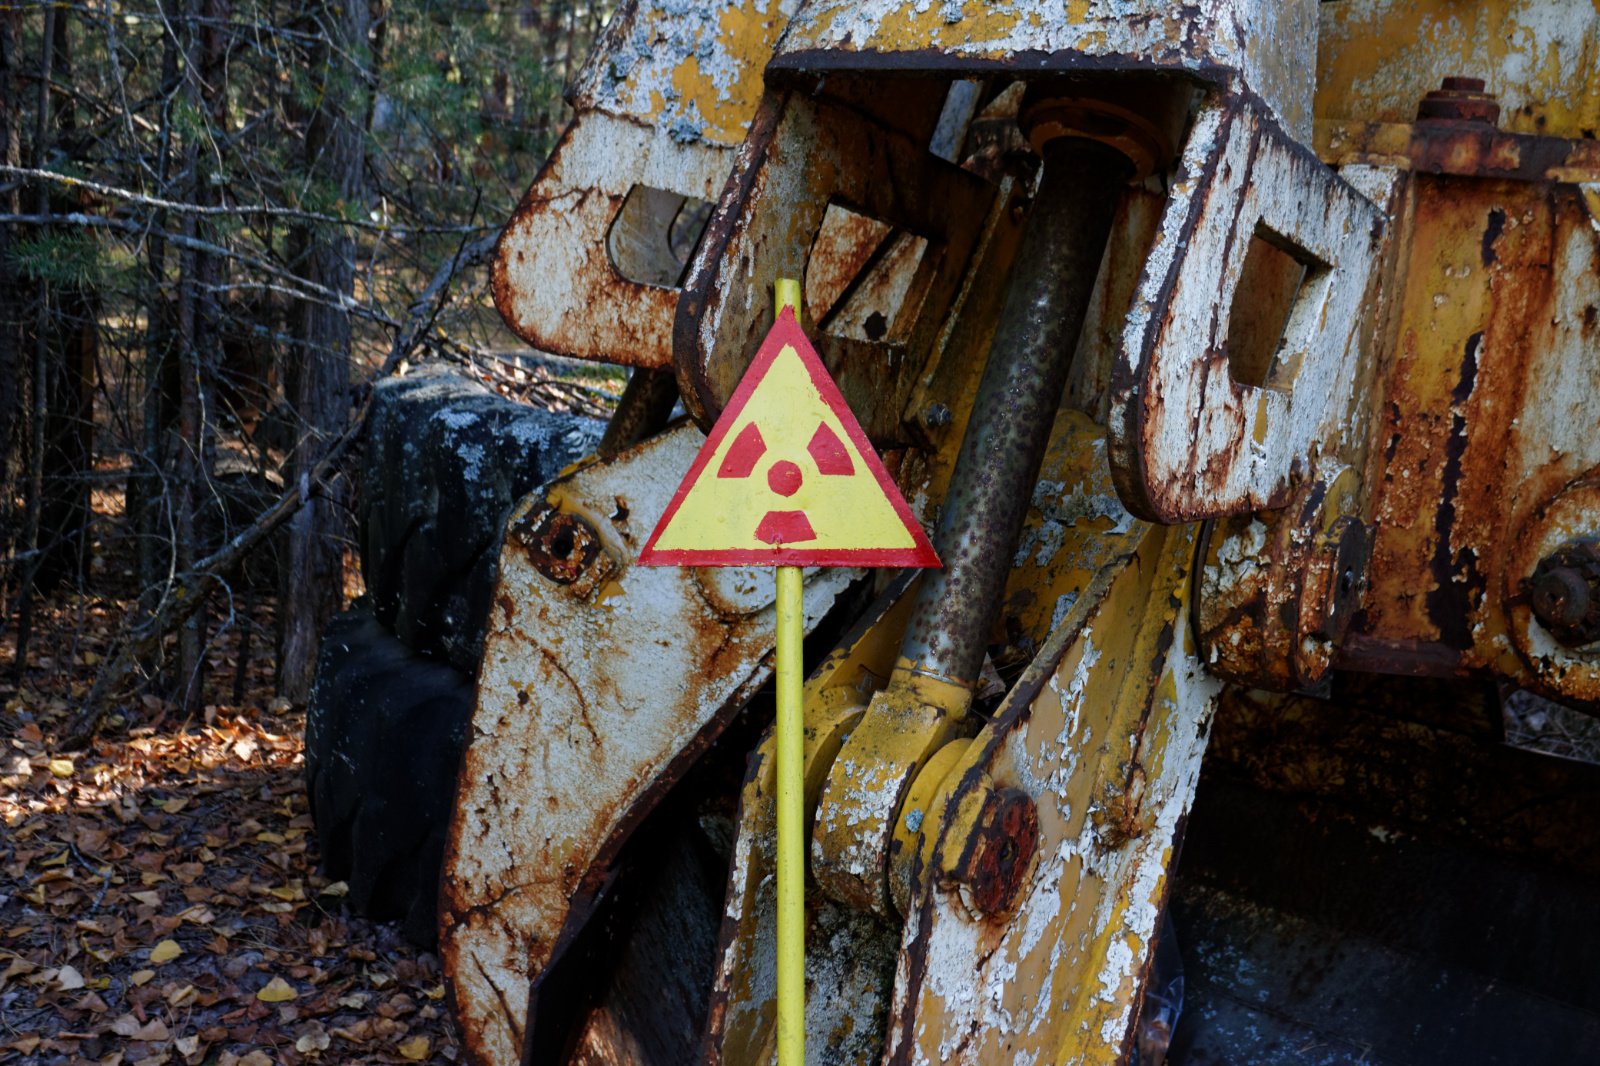 How to sneak up into Buryakivka radioactive cemetery in Chernobyl